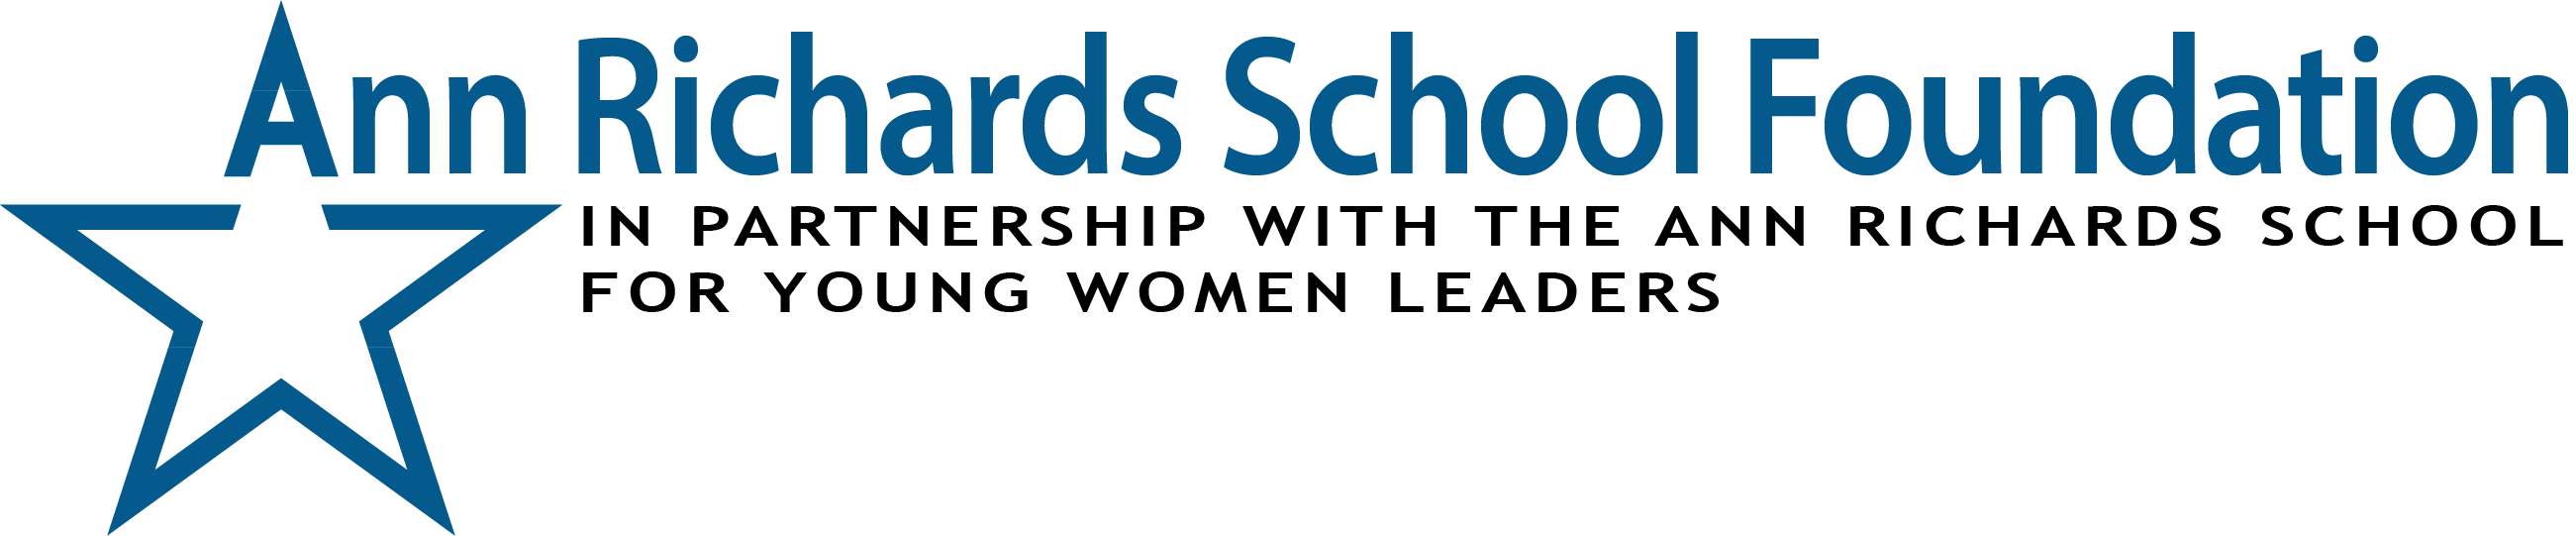 Ann Richards School Foundation